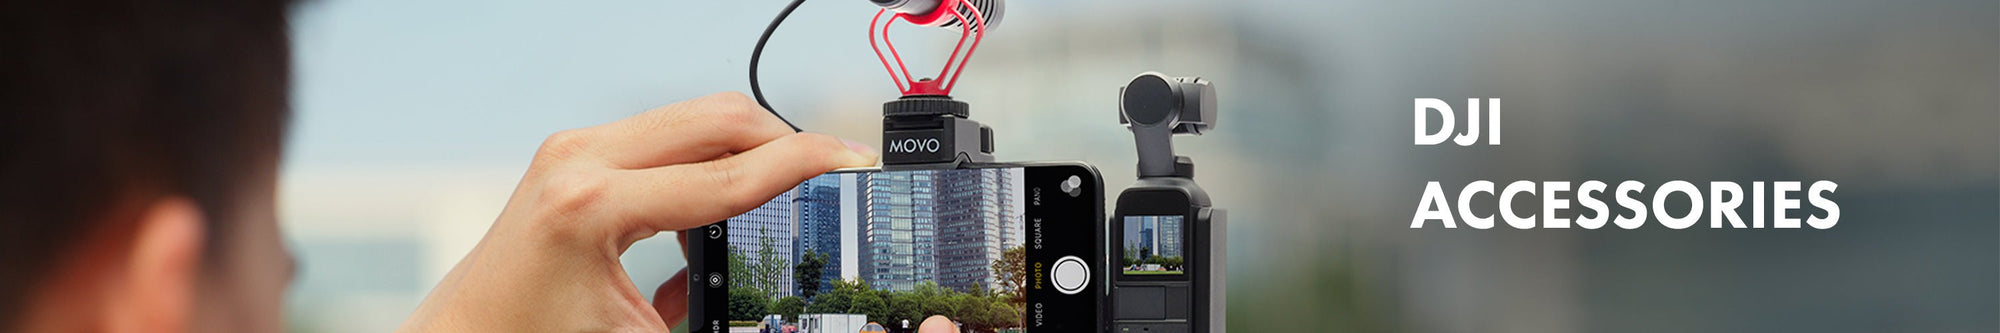 DJI Accessories & Equipment for DJI Osmo & More - Movo